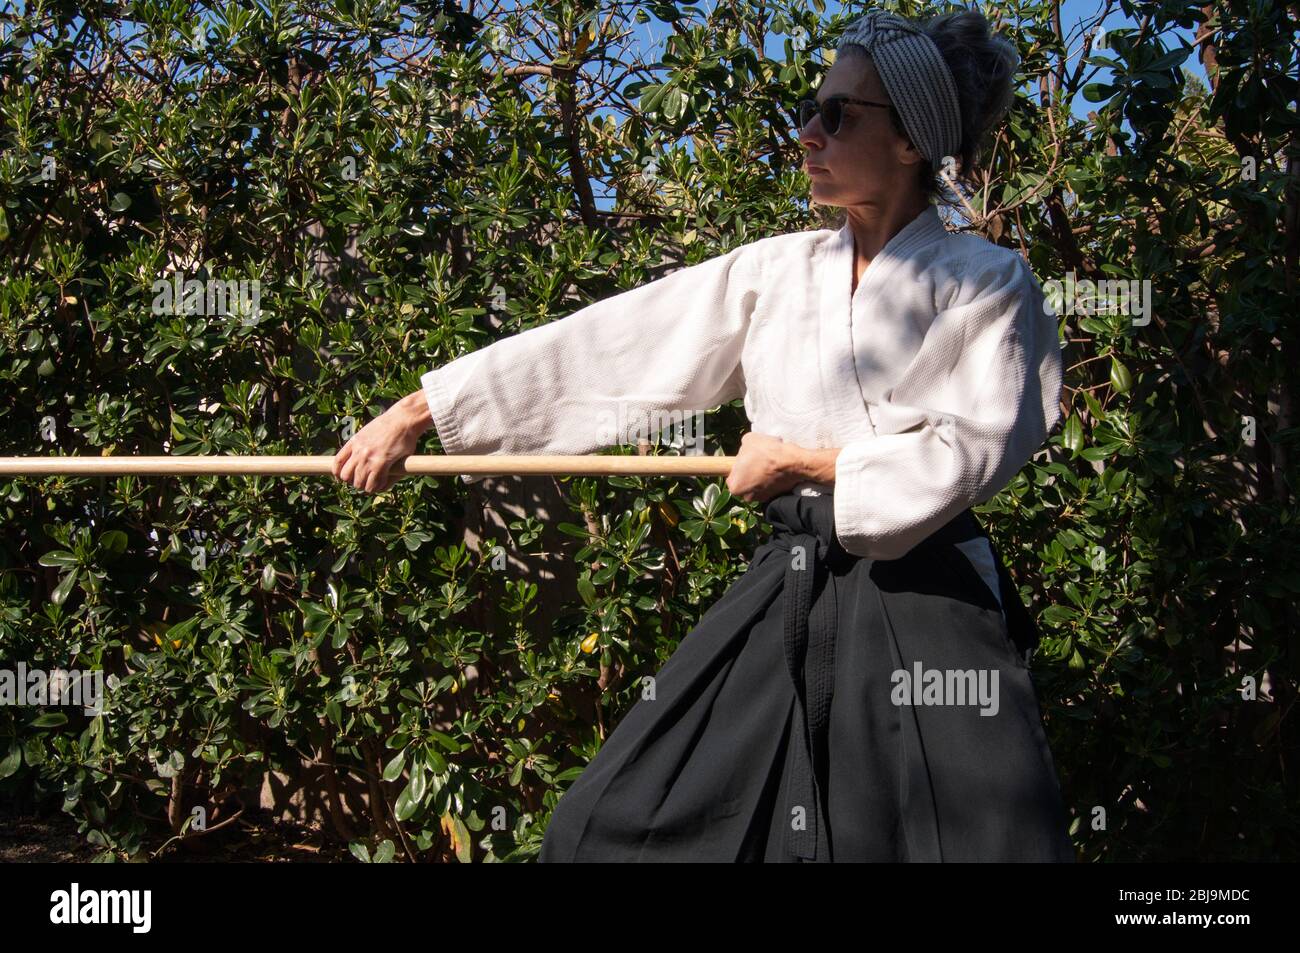 woman training Aikido in her garden during the quarantine. Weapons Aikido training - Aikido Jo kata training - Wearing black belt Aikido clothes - Tra Stock Photo